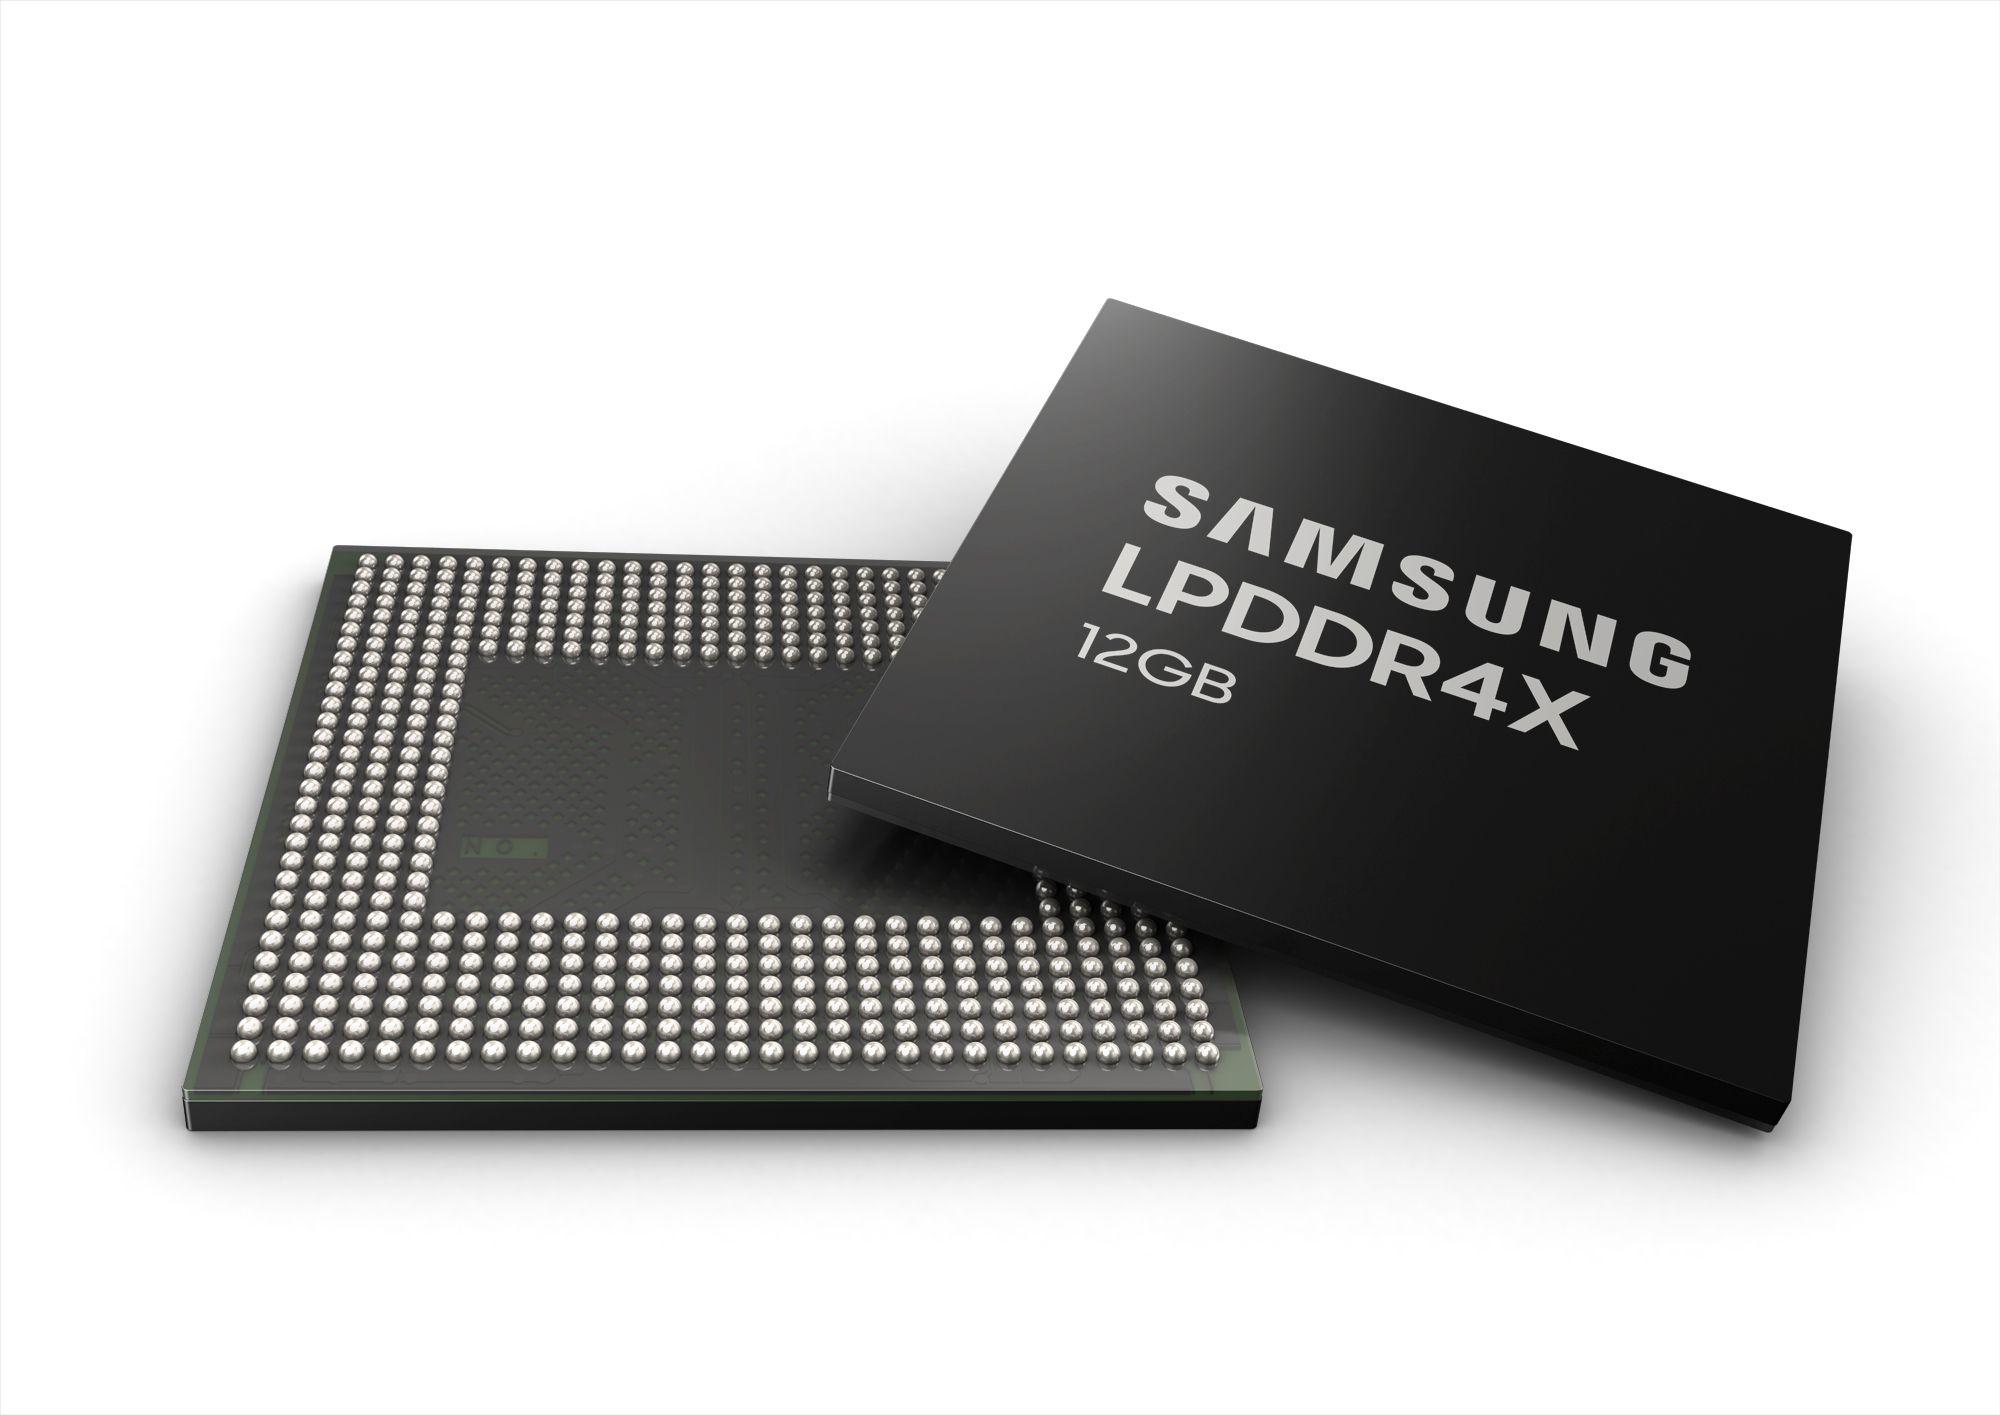 Dram Logo - Samsung Launches Highest-capacity Mobile DRAM to Accommodate Next ...